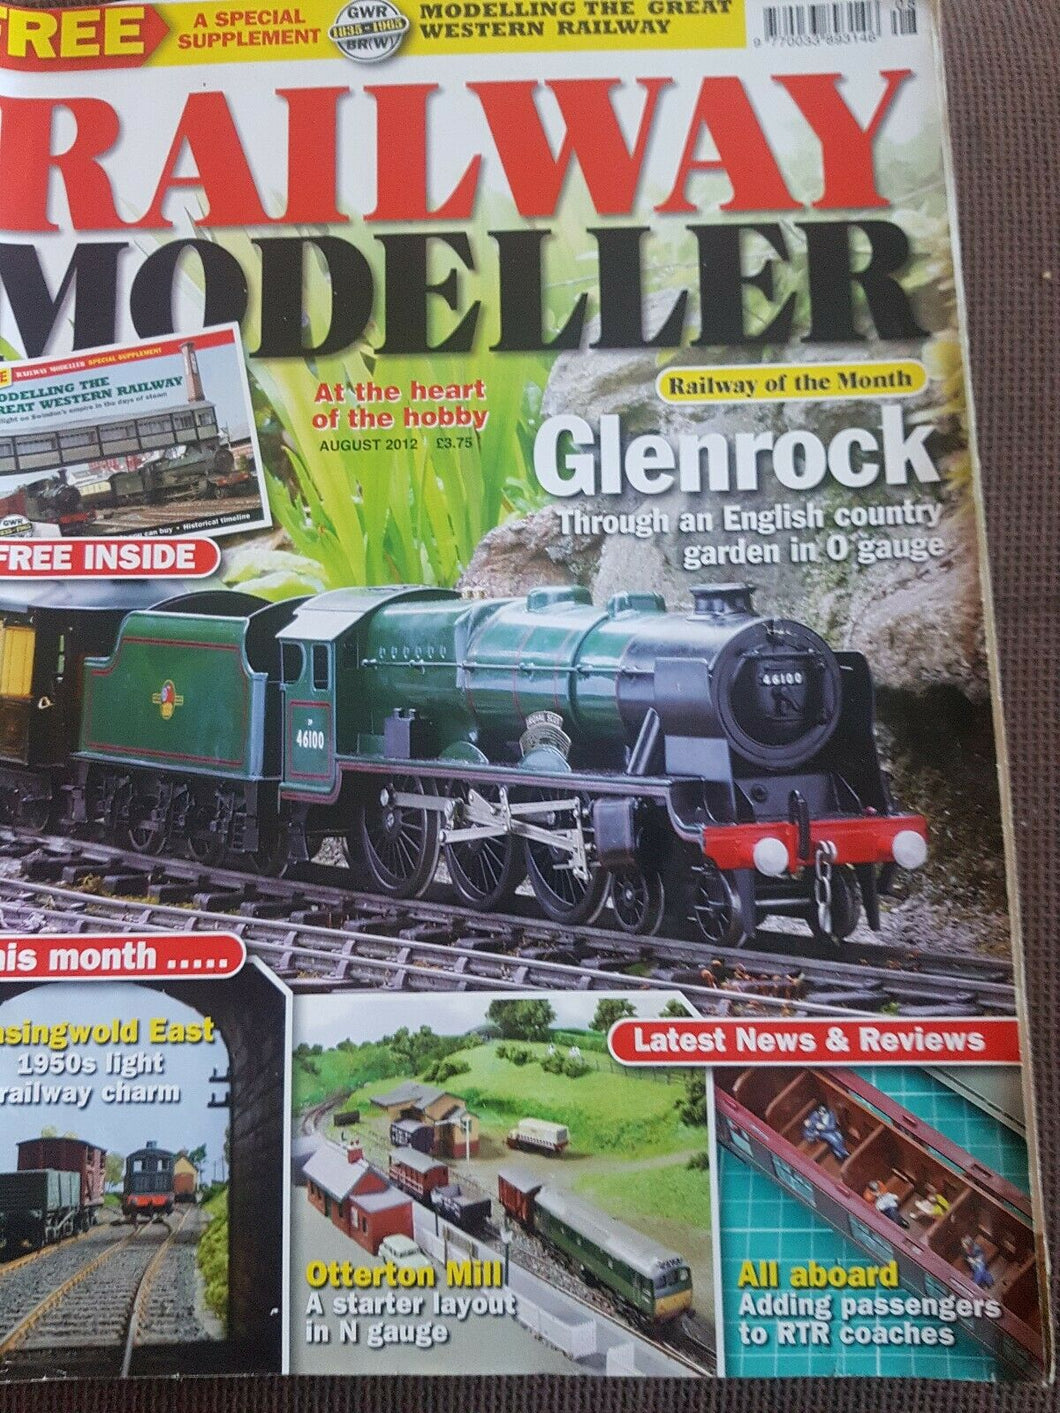 Railway modeller magazine August 2012